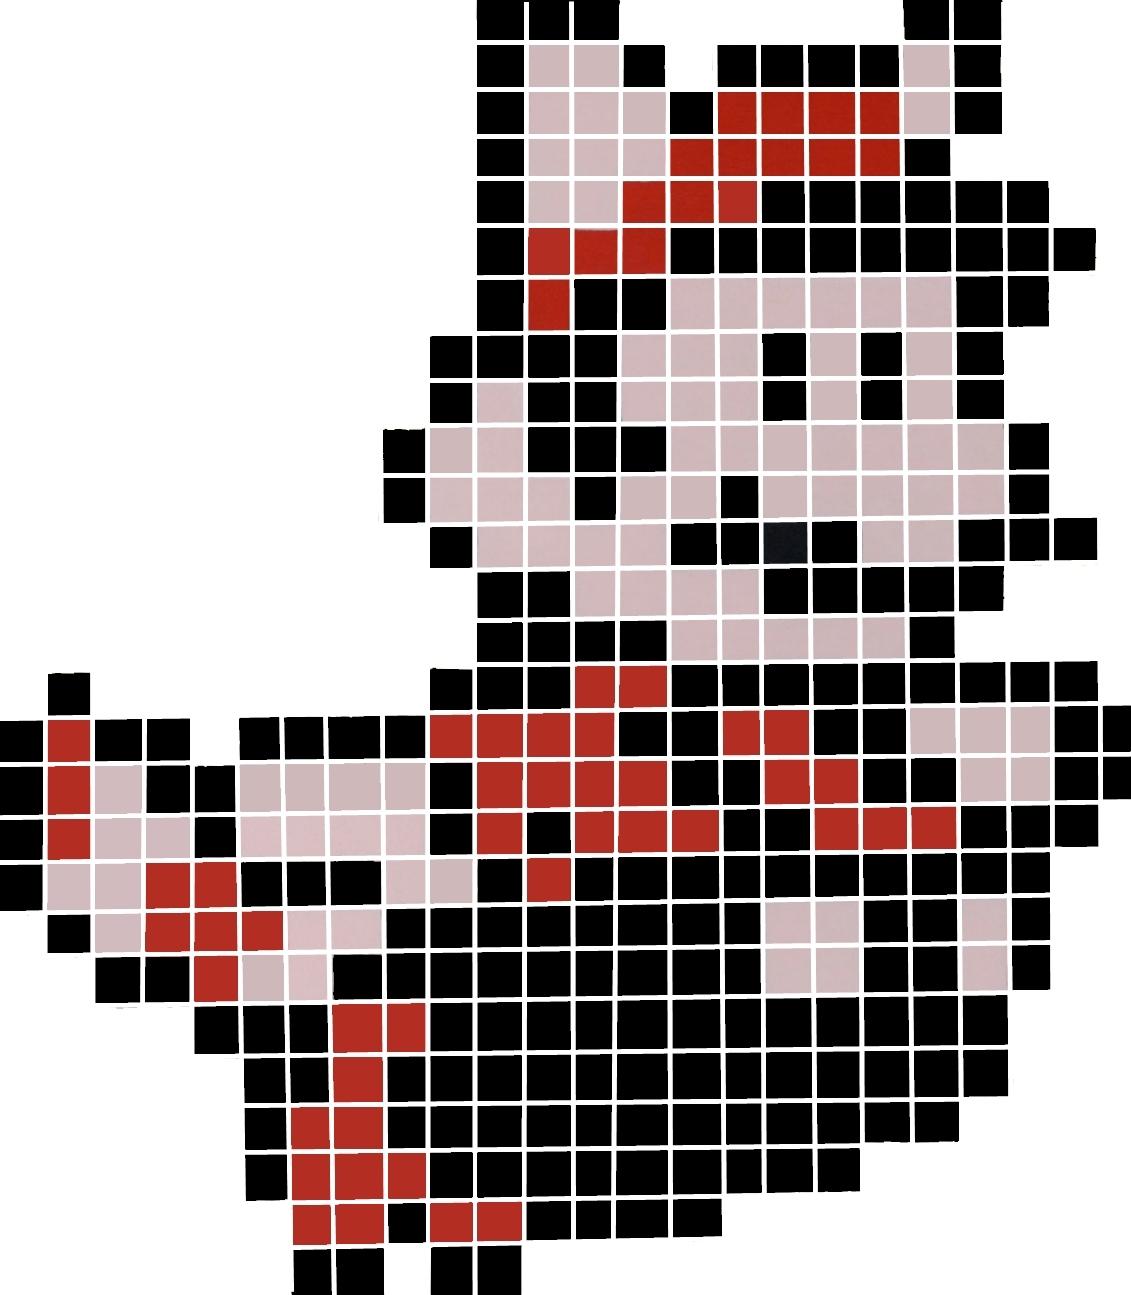 mario pixel art with grid pixel art grid gallery.